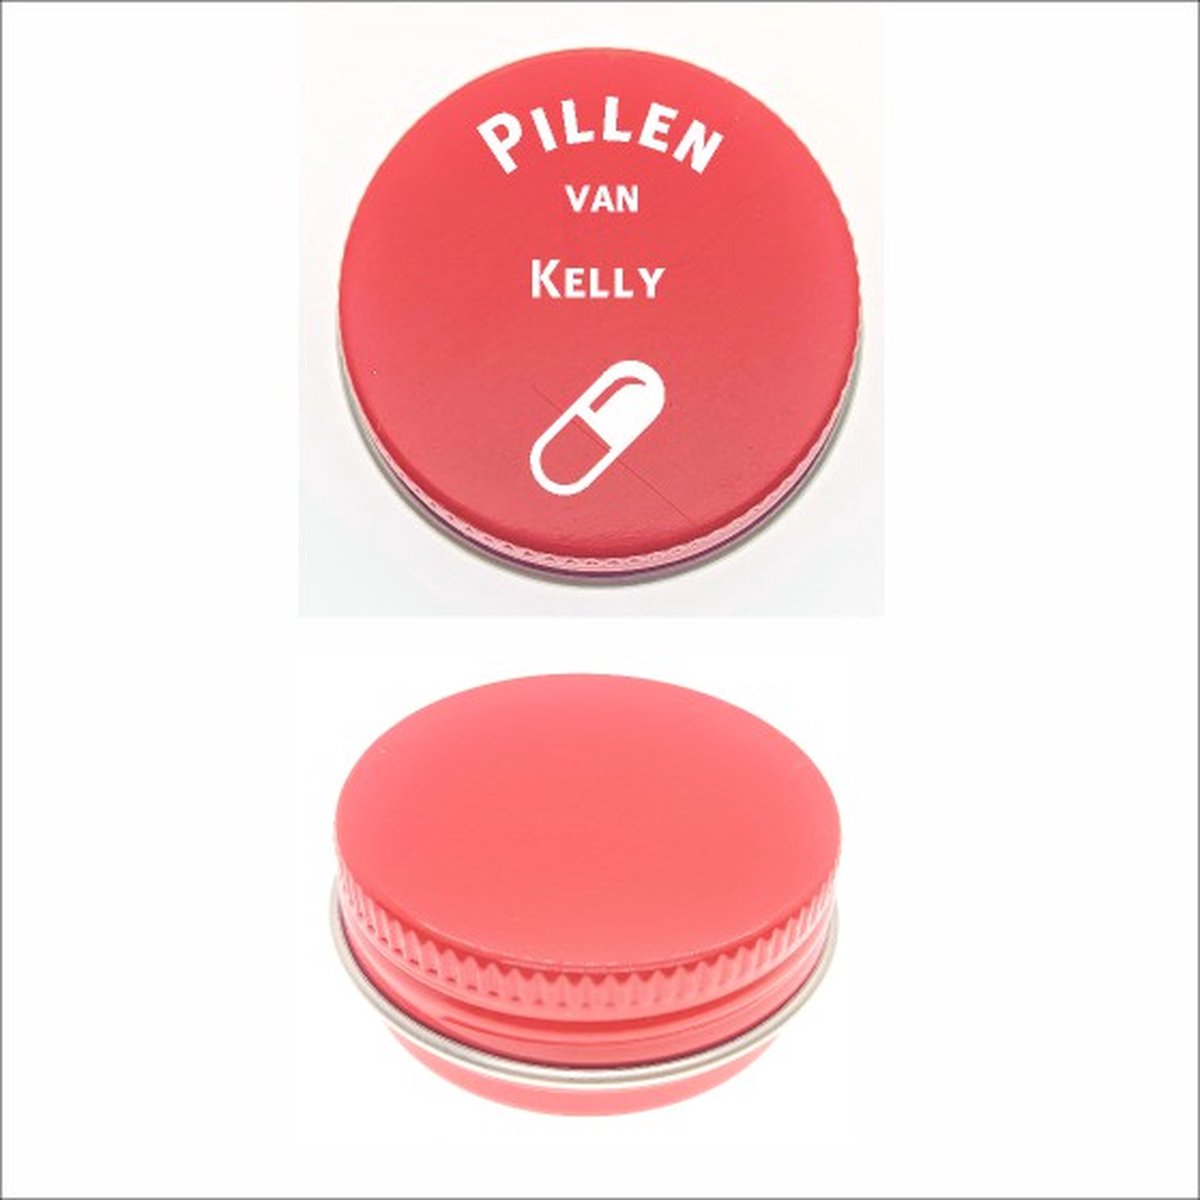 Pillen Blikje Met Naam Gravering - Kelly